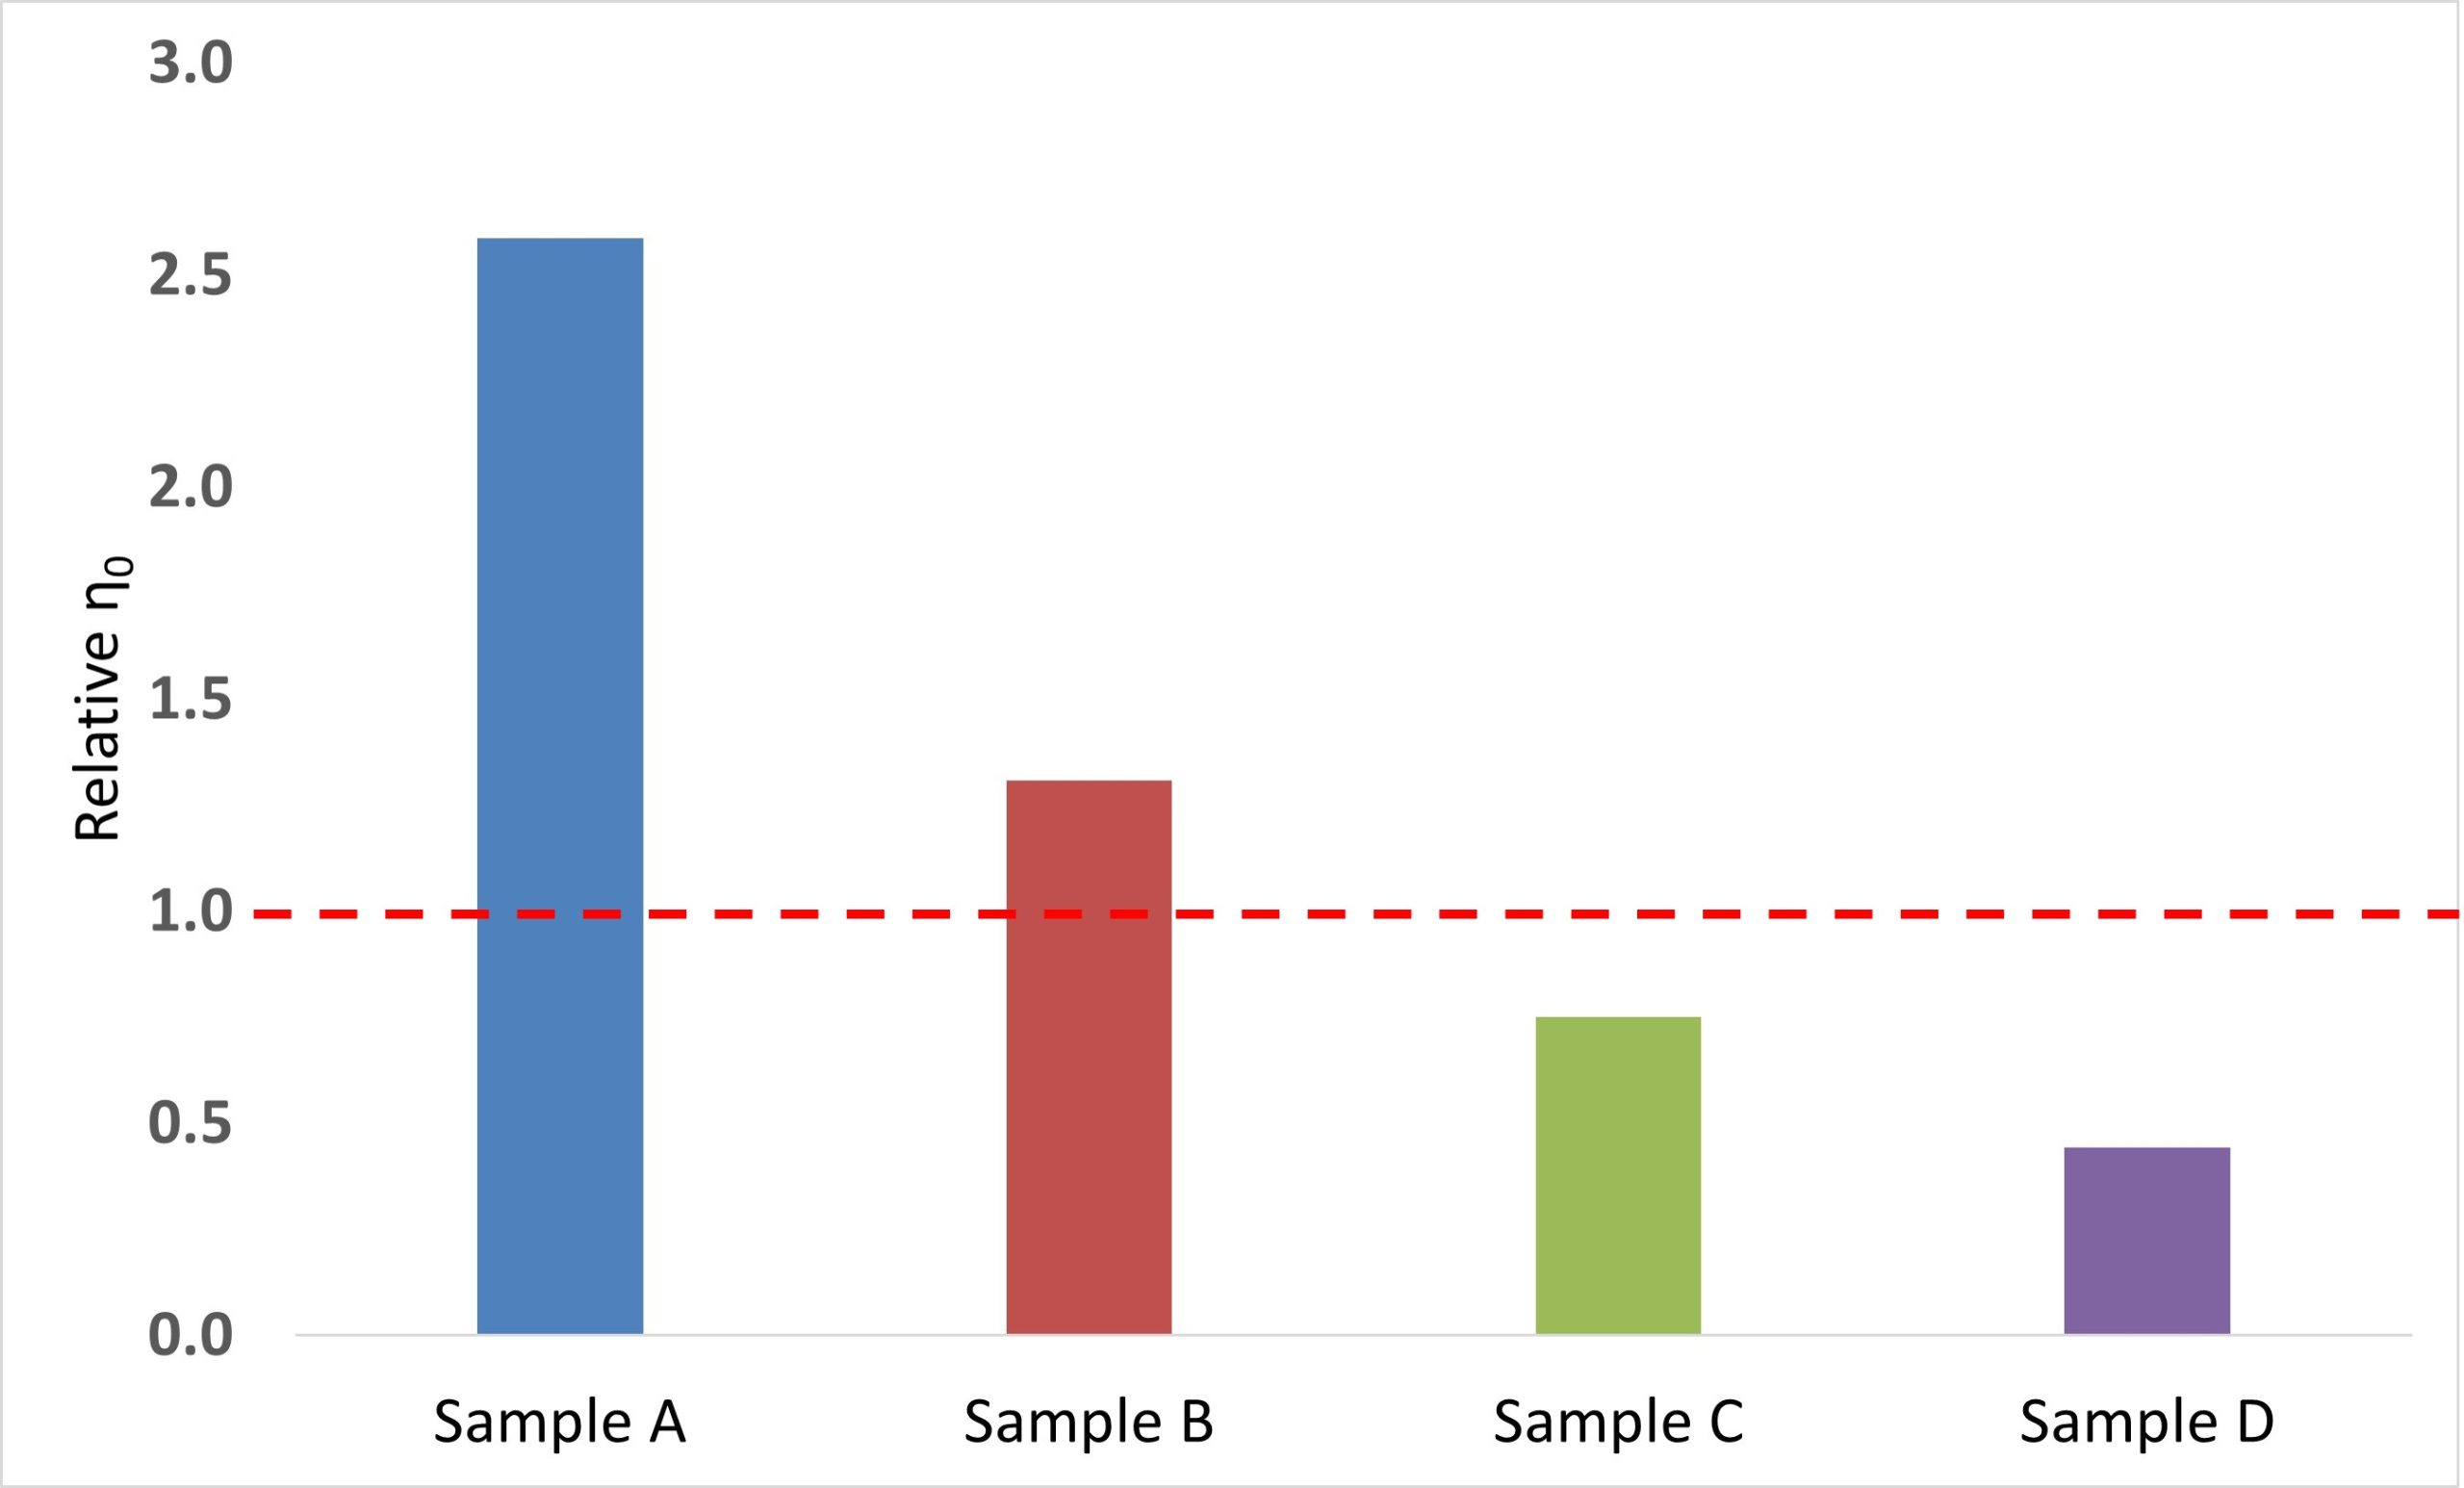 plot of samples versus relative viscosity change upon mixing with mucin